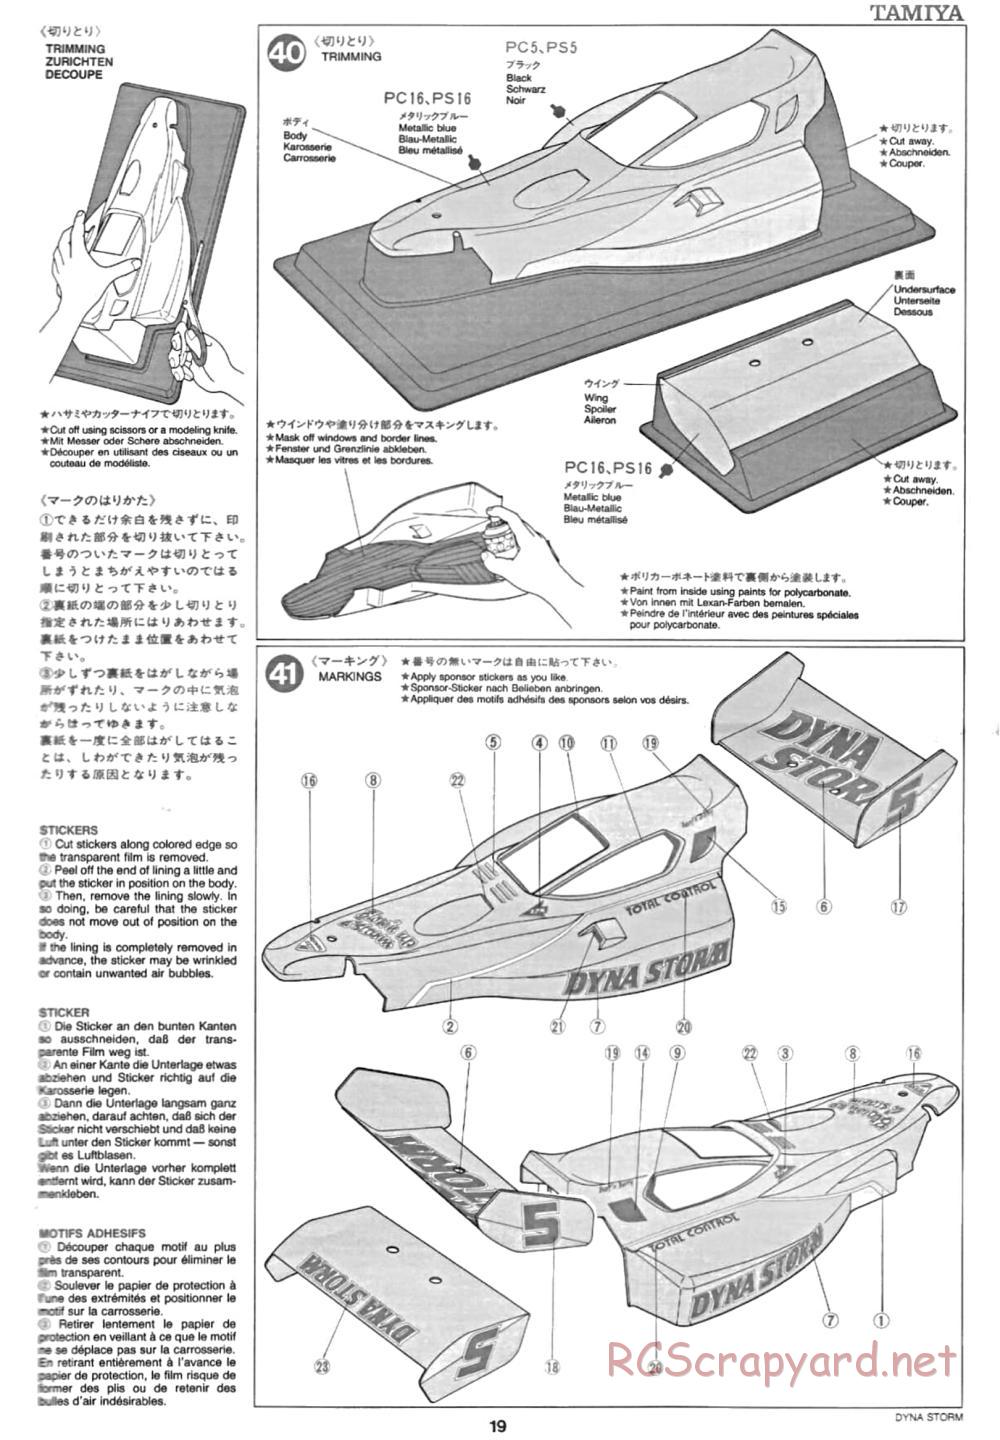 Tamiya - Dyna Storm Chassis - Manual - Page 19